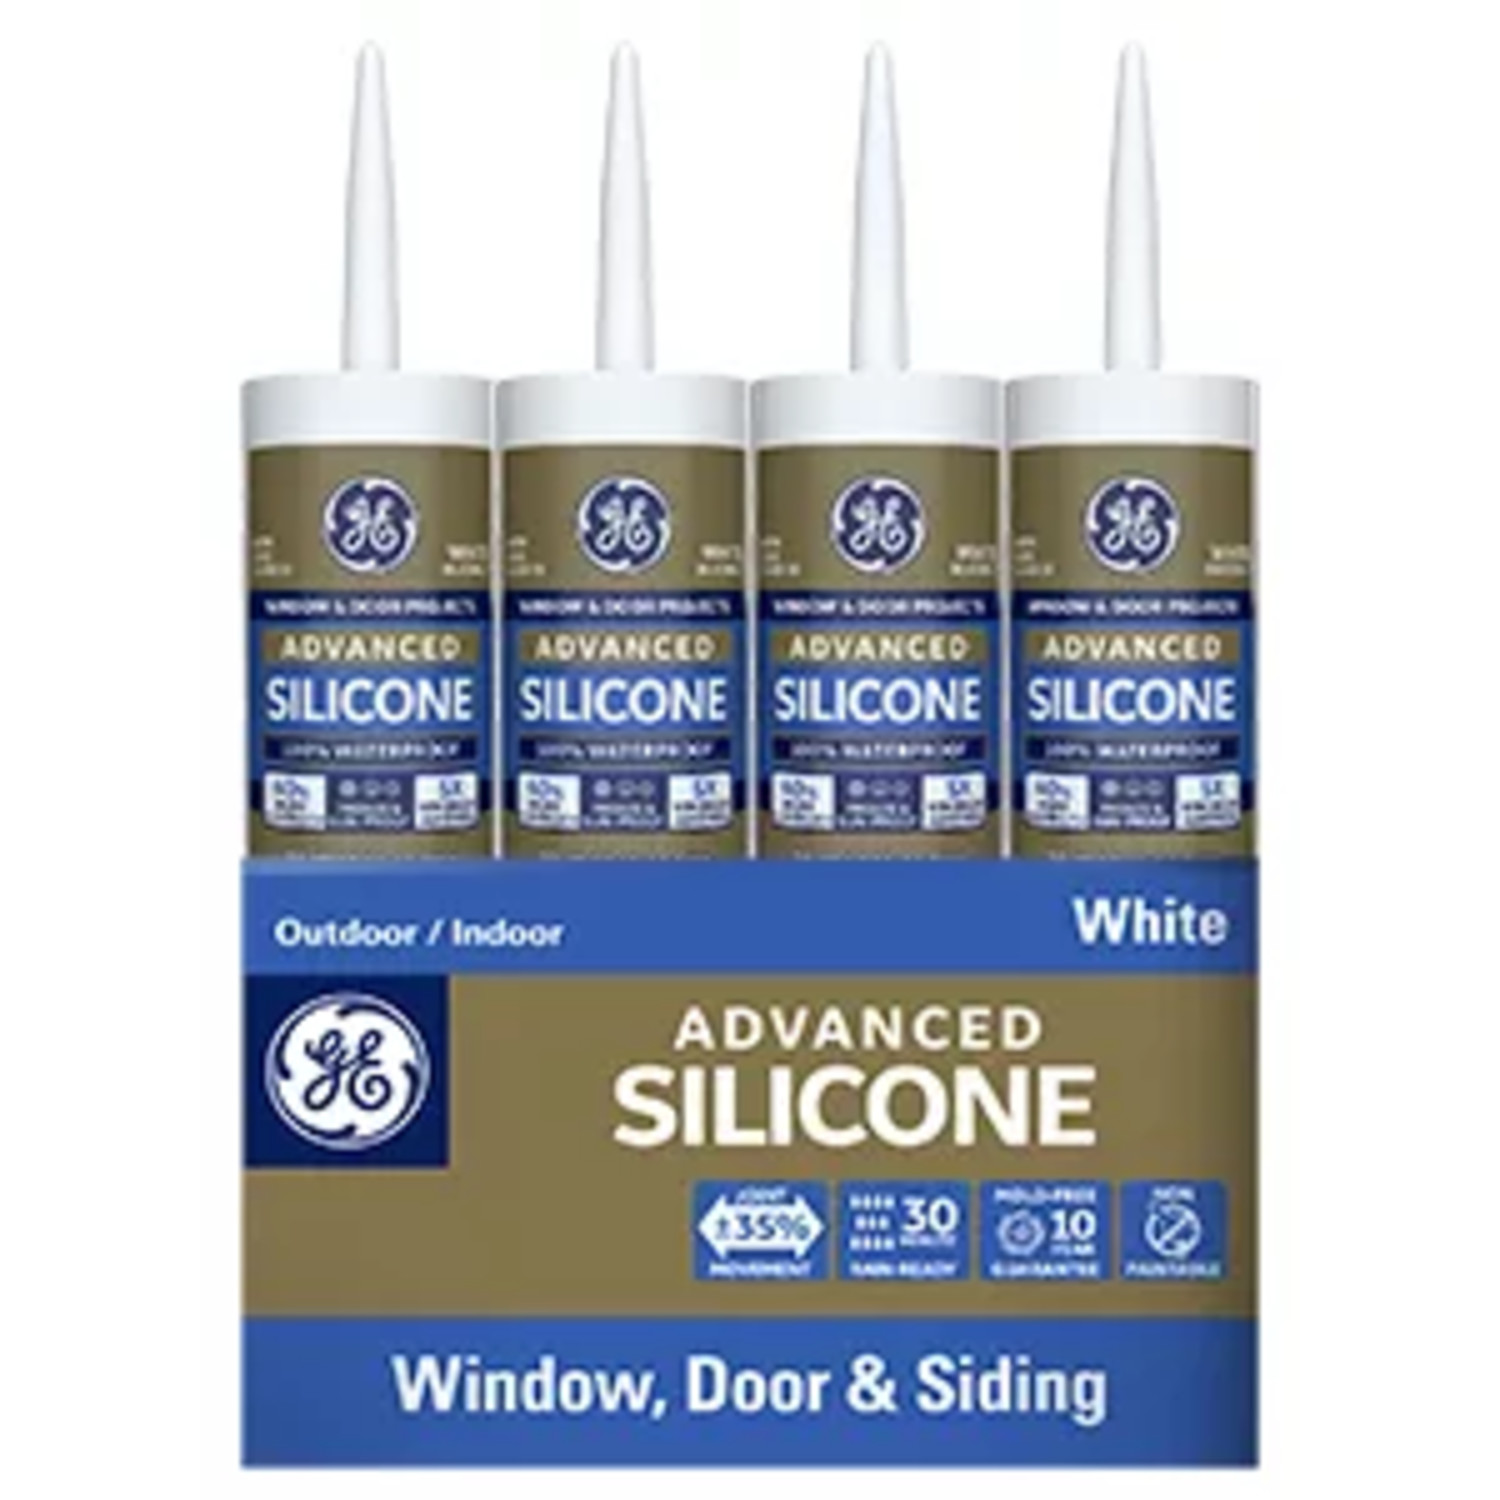 GE Advanced Silicone Window & Door Sealant, 1, White 10.1 oz Cartridge - image 3 of 12